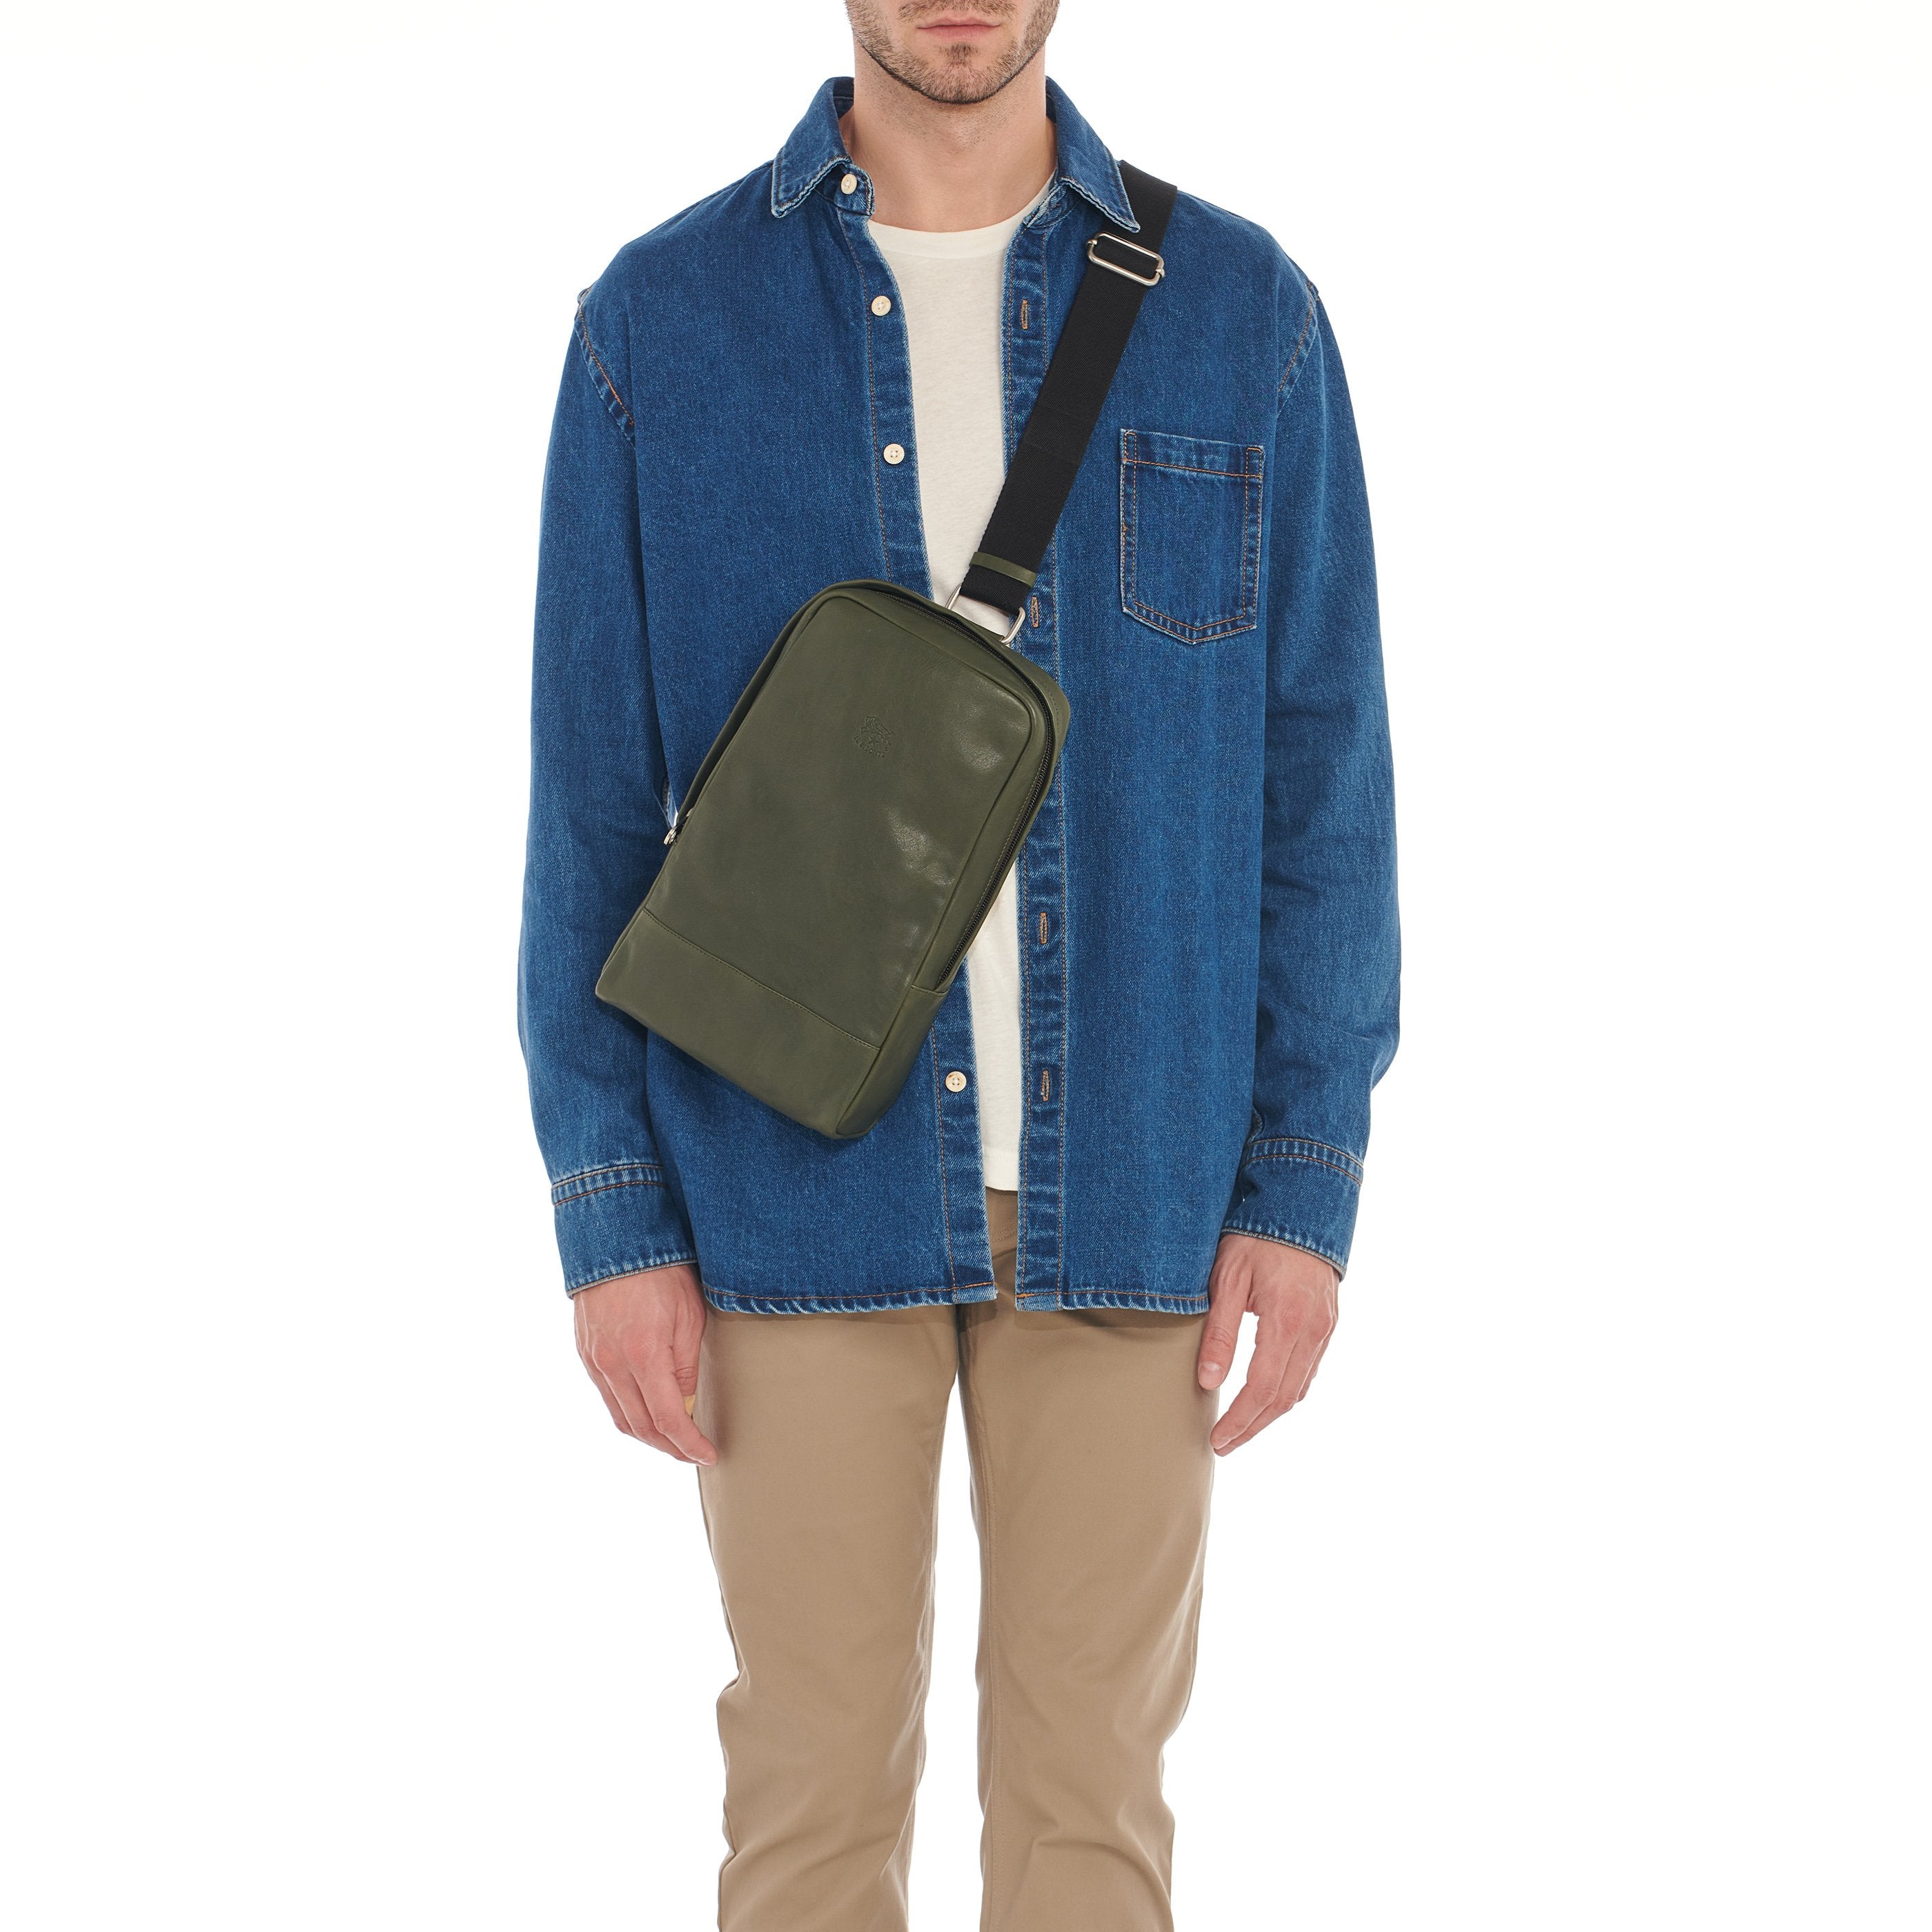 Cestello | Men's one strap backpack in vintage leather color forest